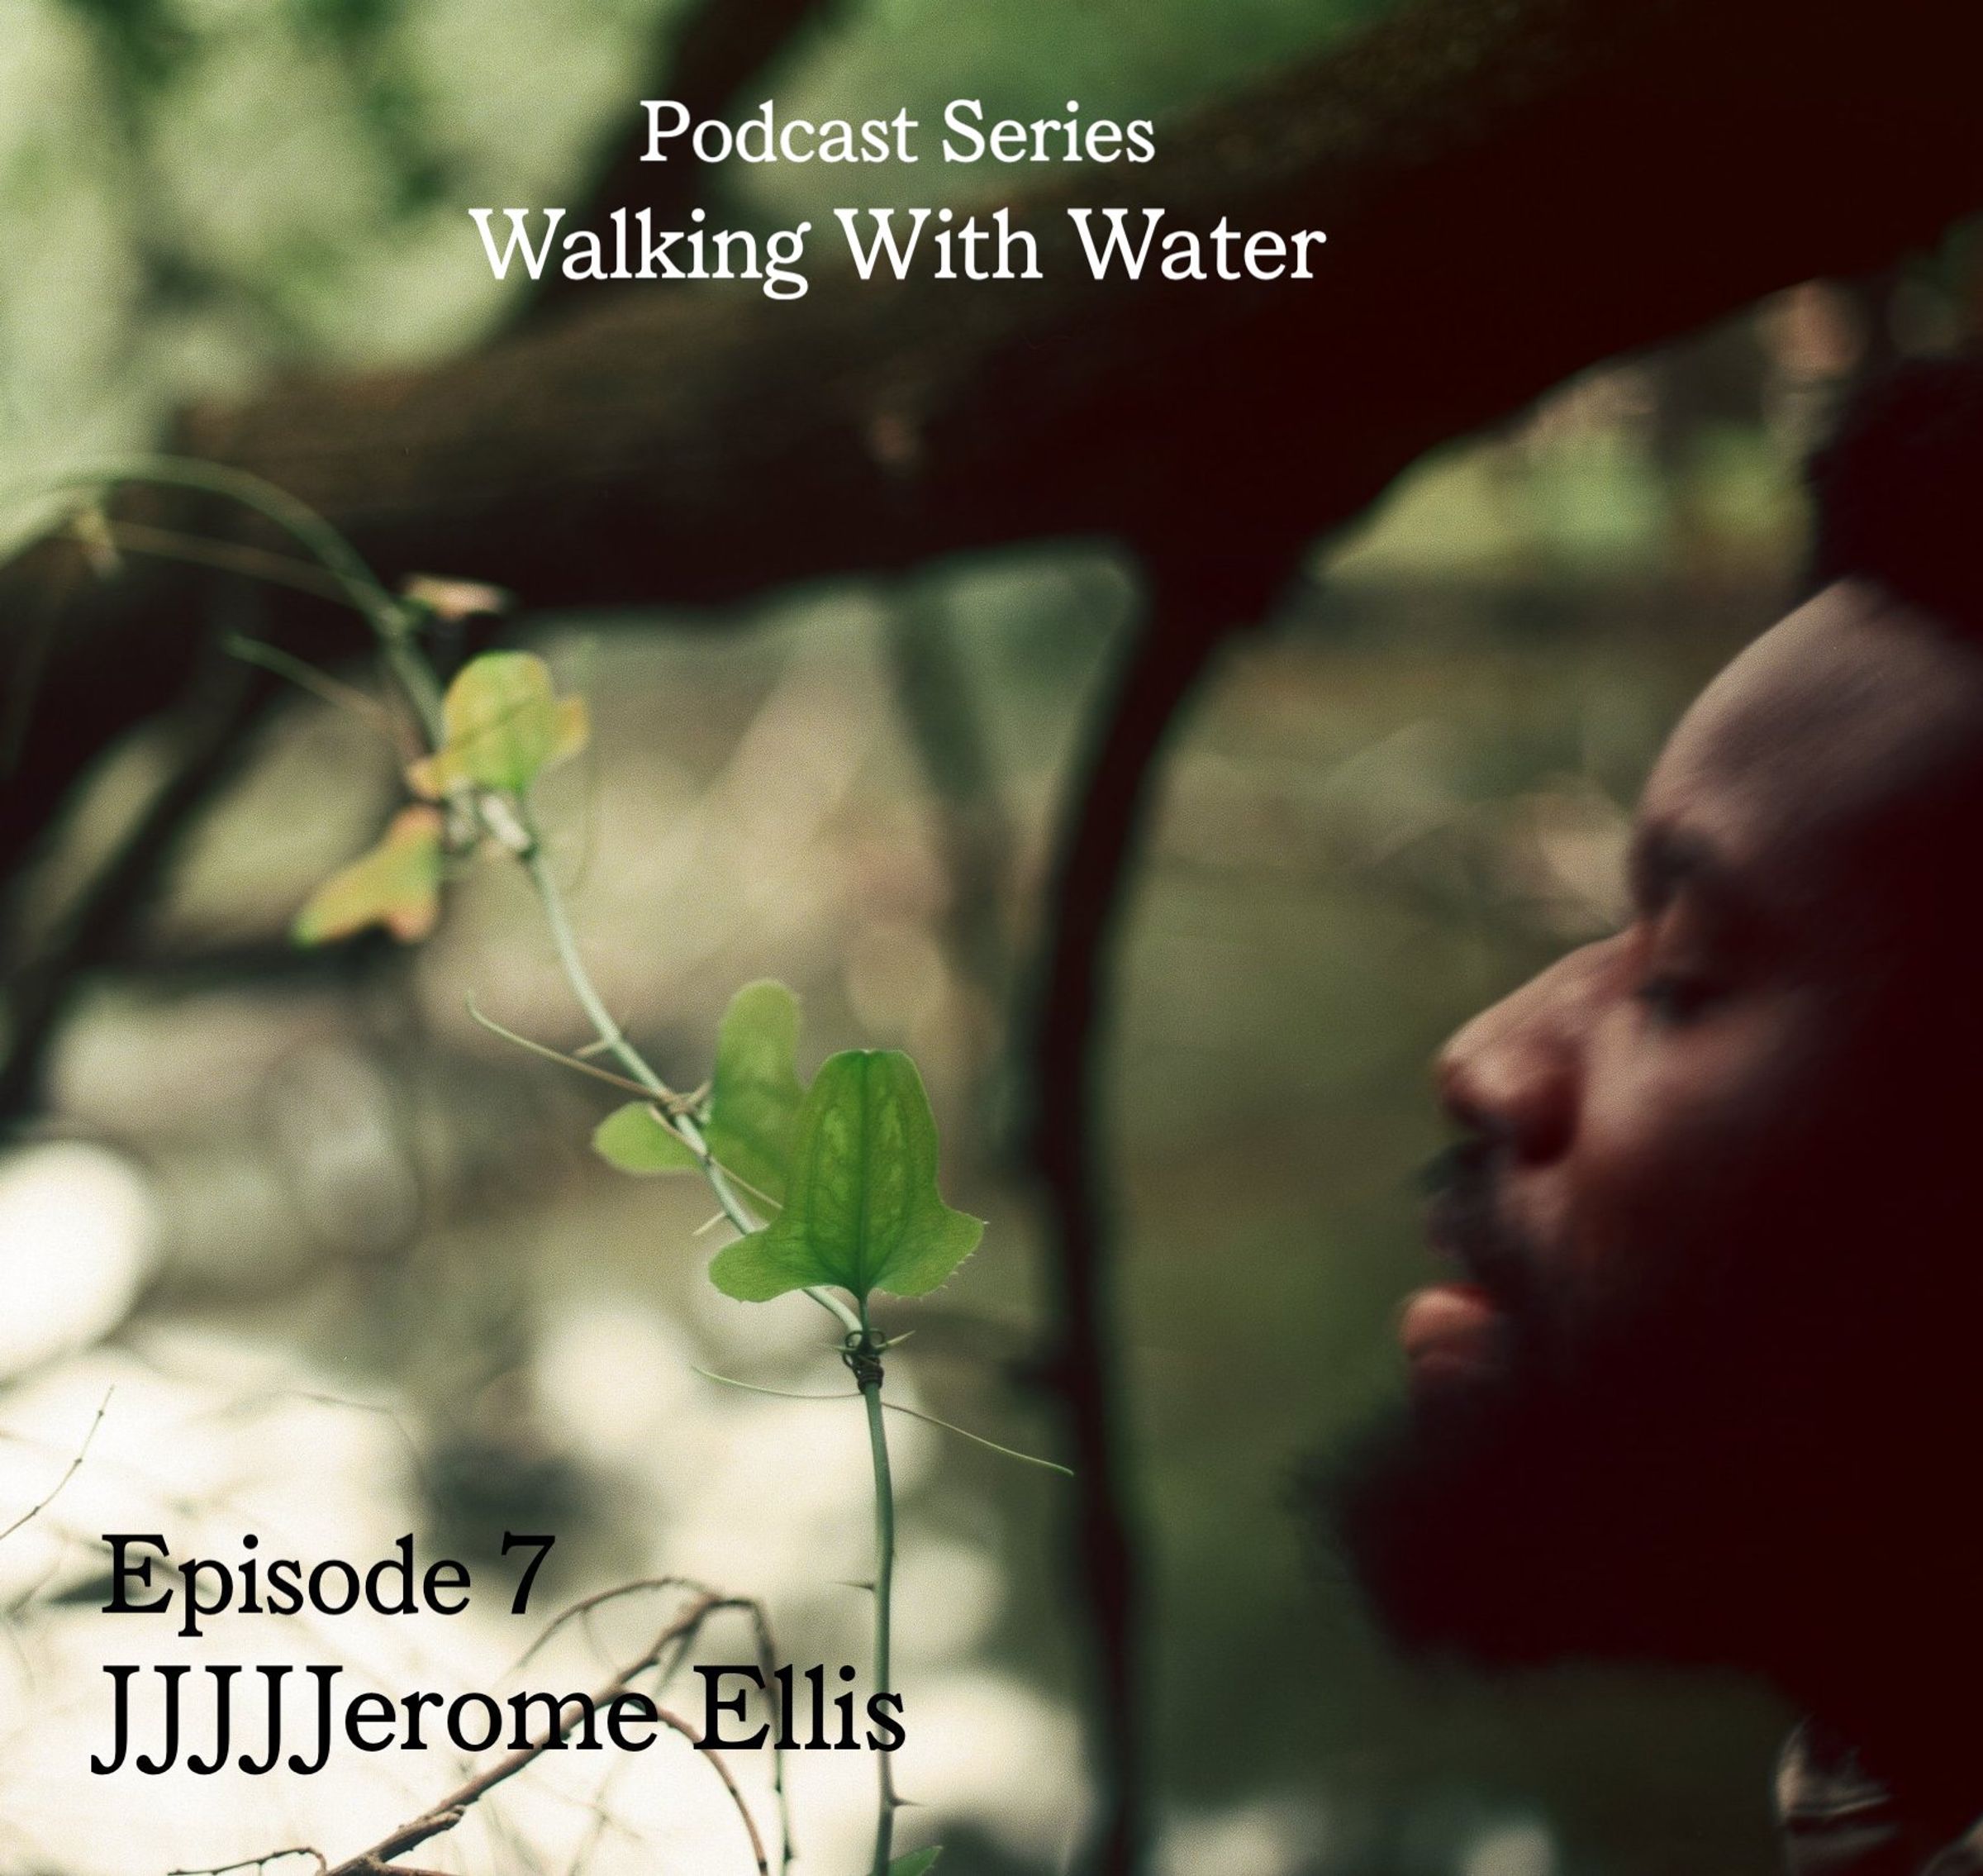 Preview image for Podcast Series - Walking With Water_Episode 7: Jjjjjerome Ellis, Dysfluent Waters, Jjjjjerome Ellis